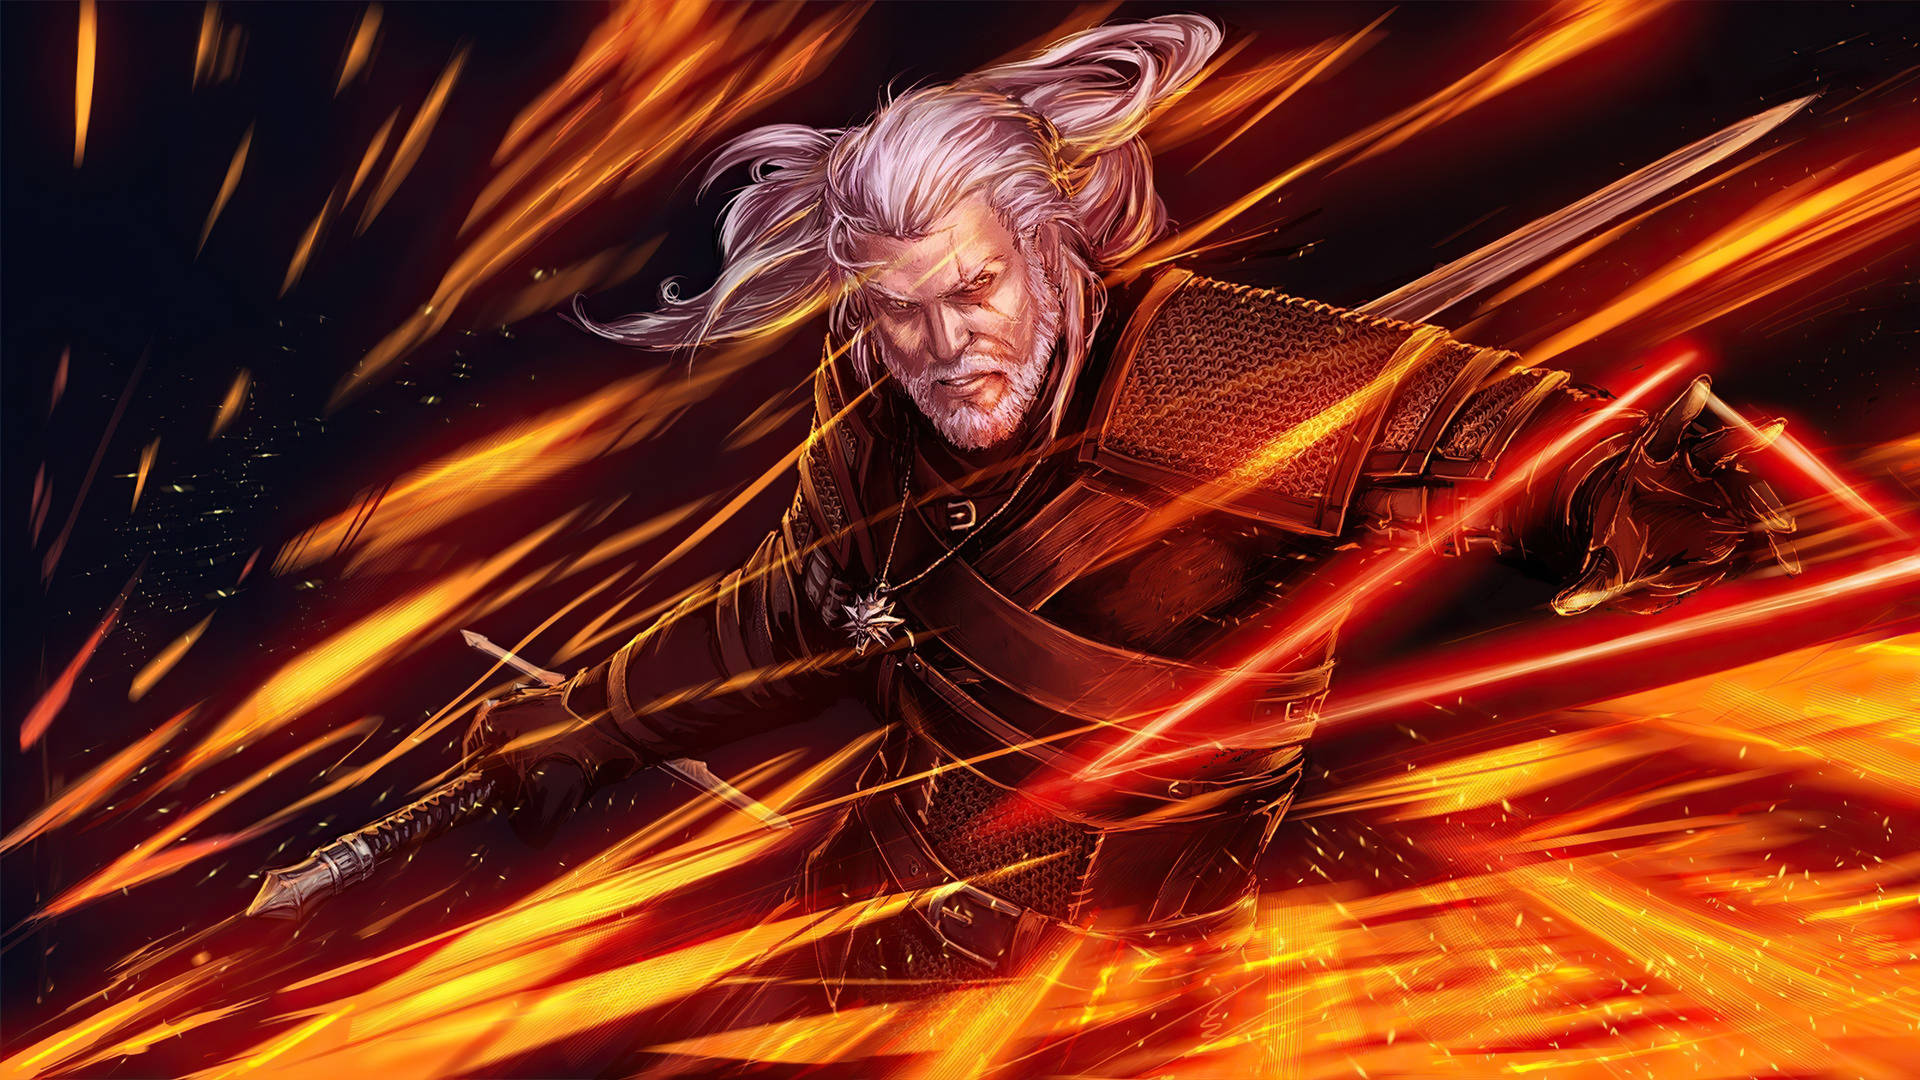 Fire Spark Geralt The Witcher 3 Background